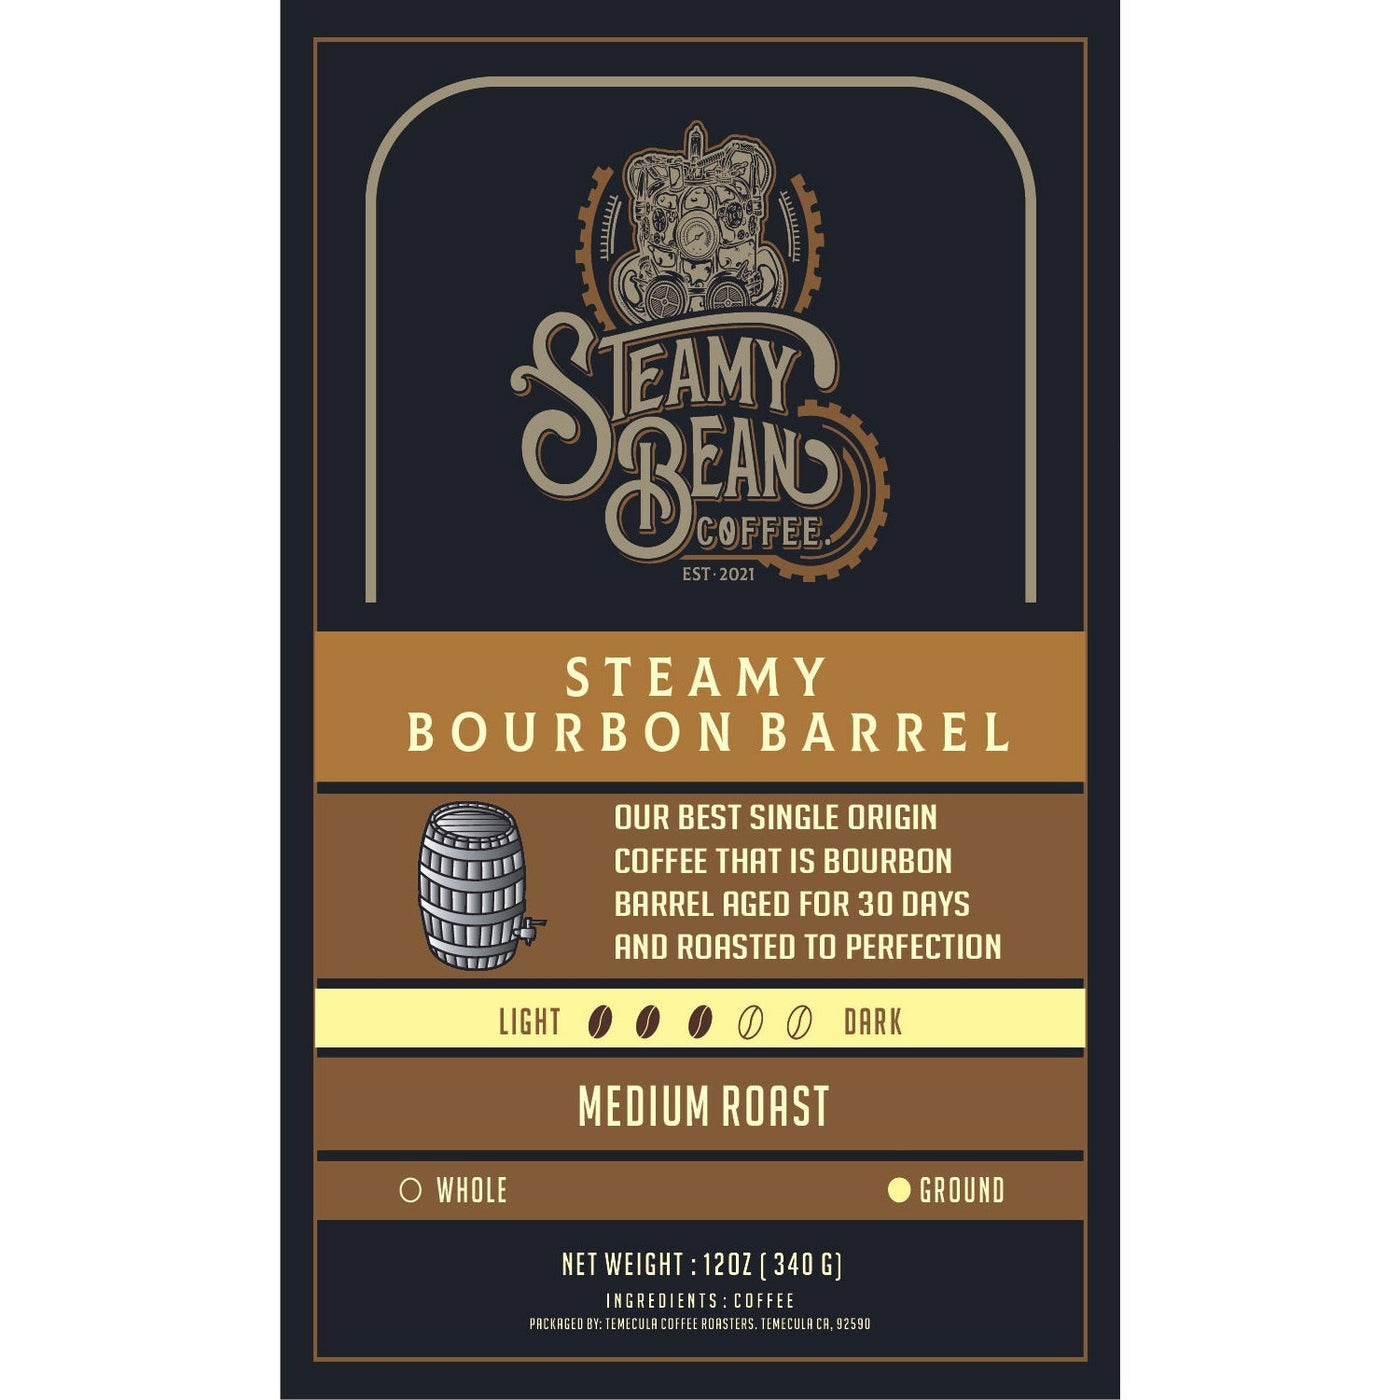 Steamy Bourbon Barrel label. 